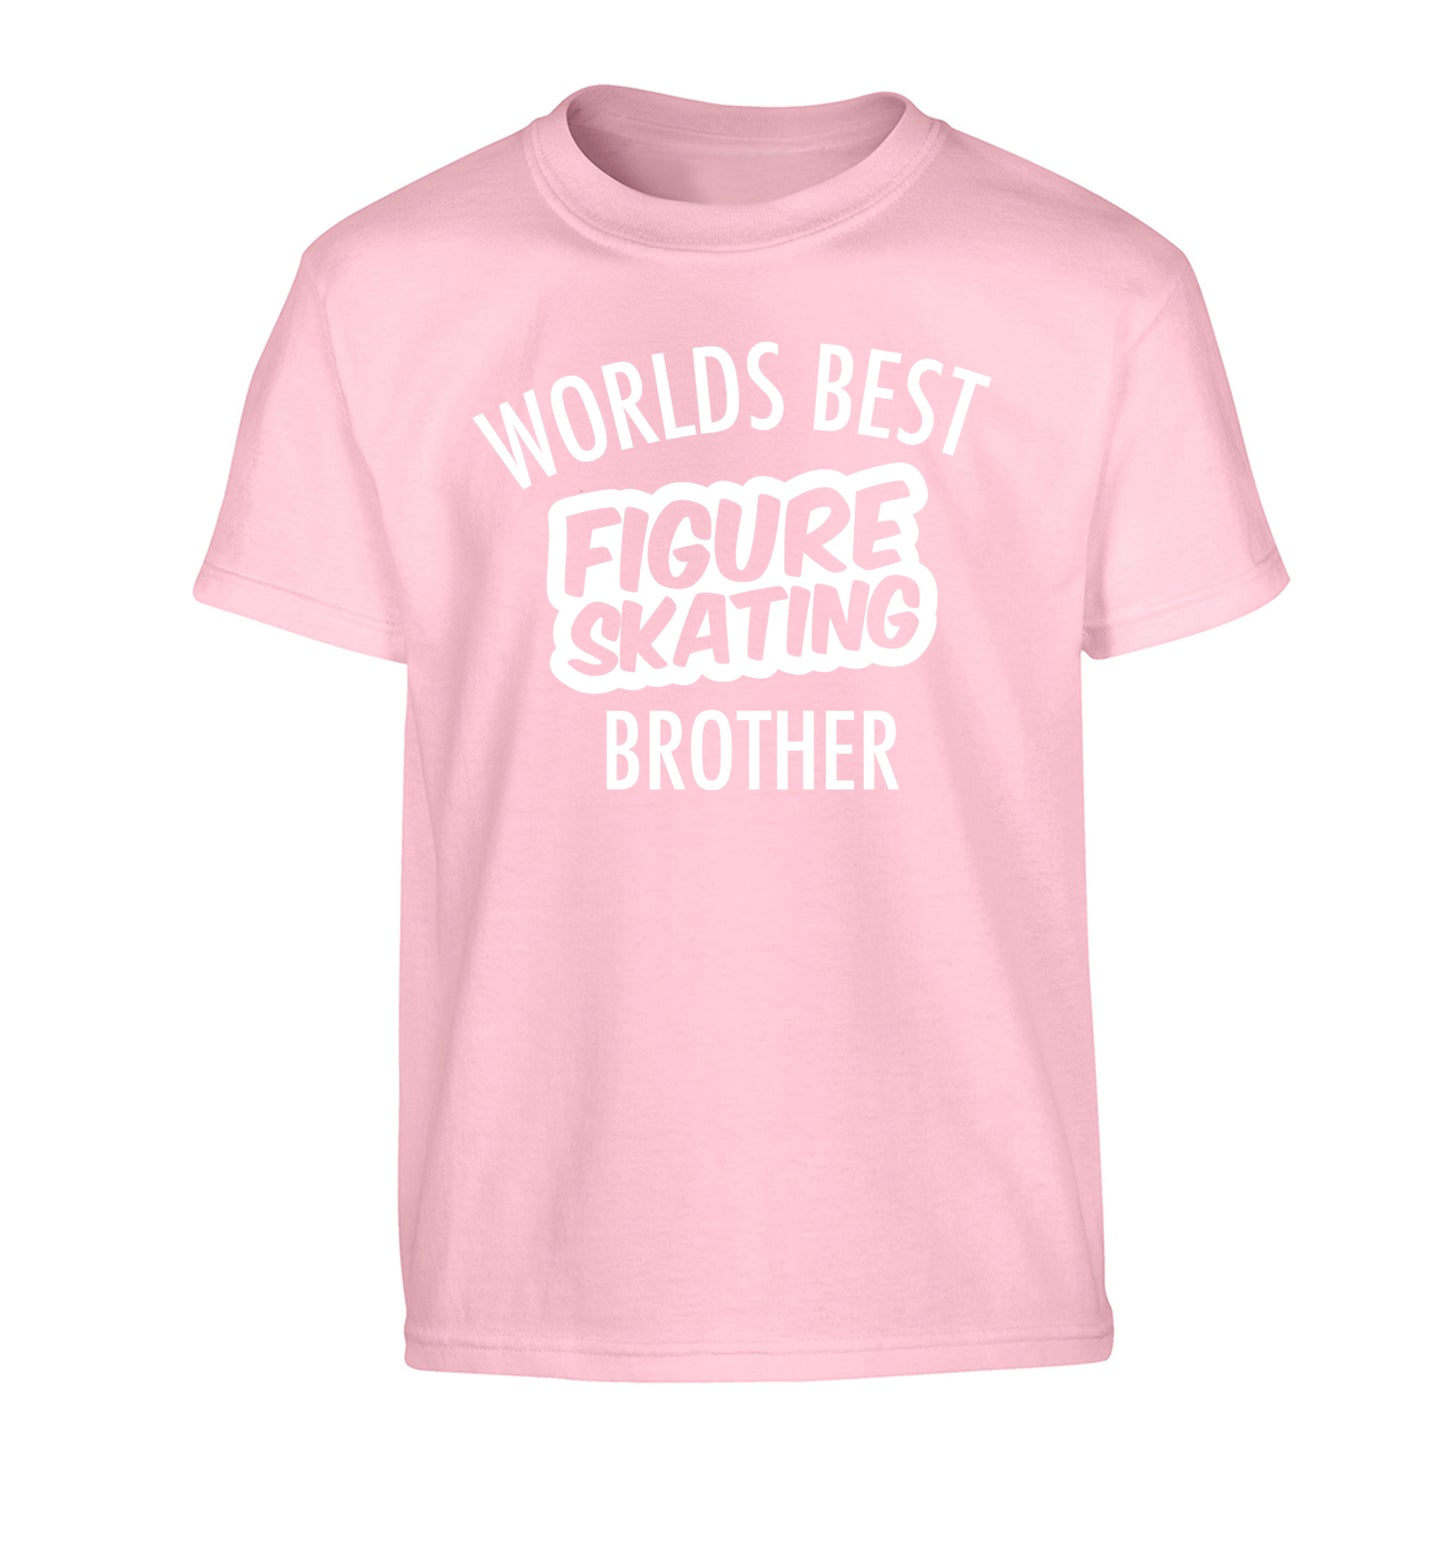 Worlds best figure skating brother Children's light pink Tshirt 12-14 Years